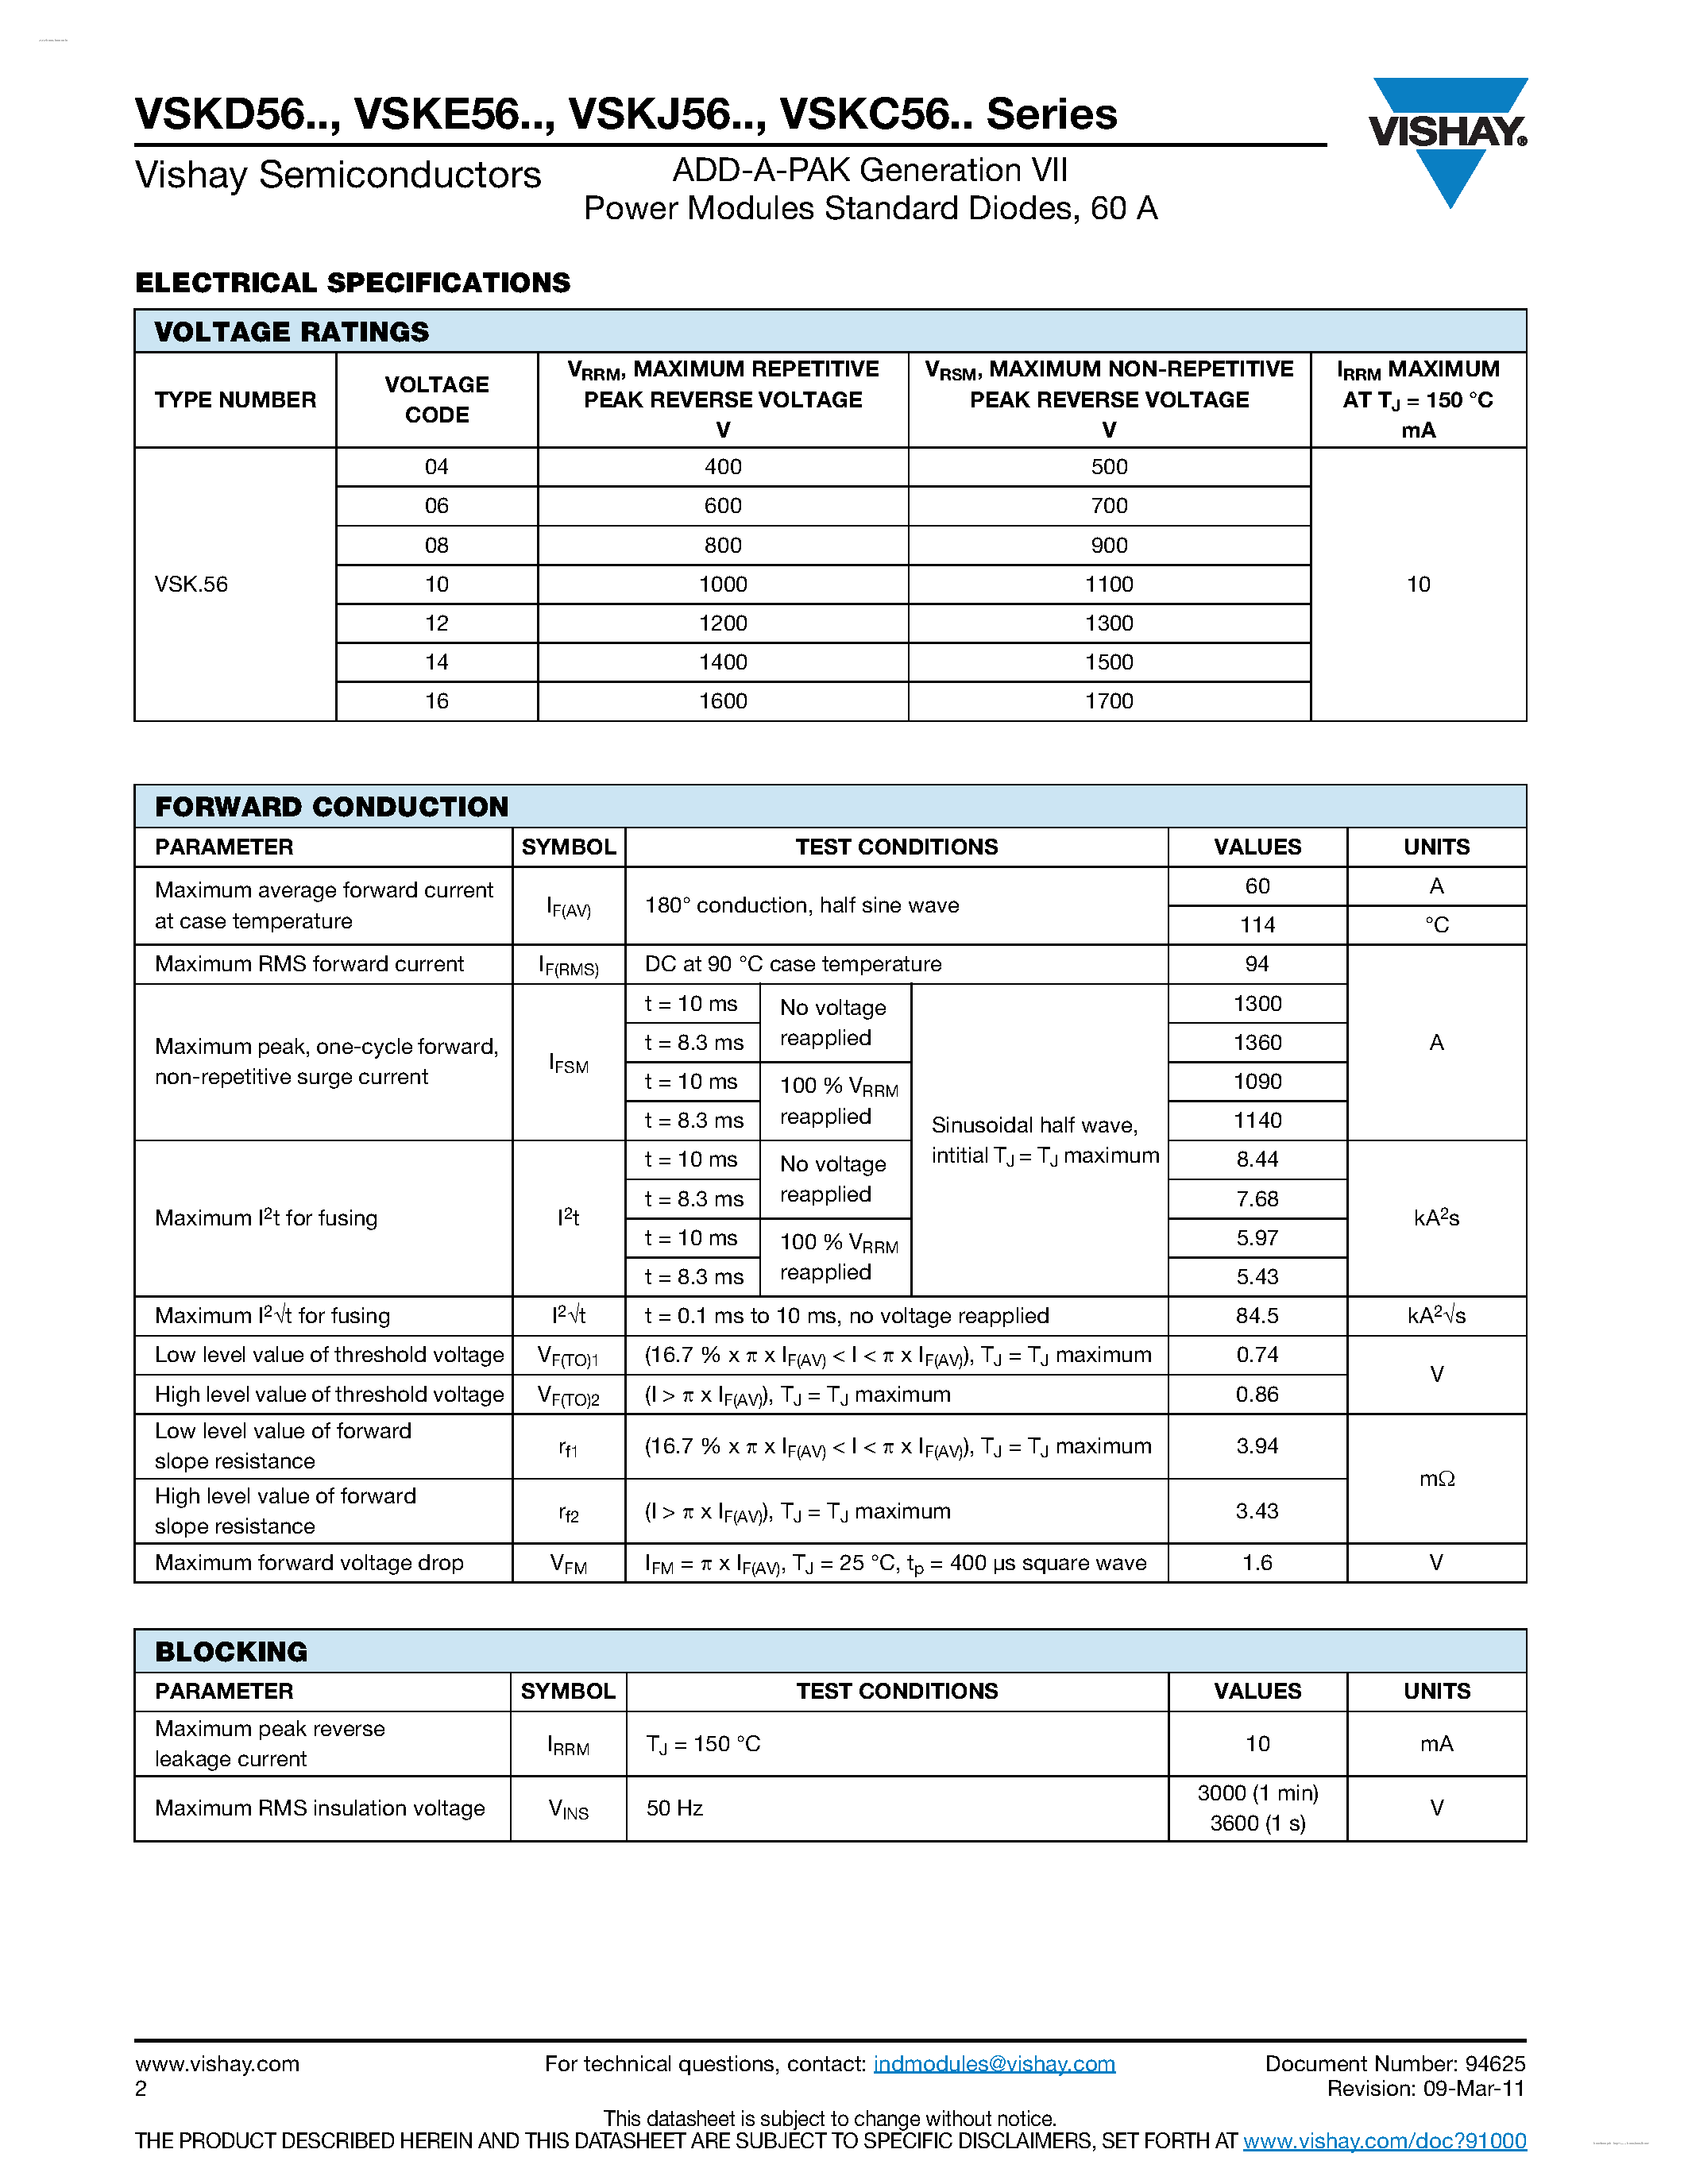 Datasheet VSKC56 - ADD-A-PAK Generation VII page 2